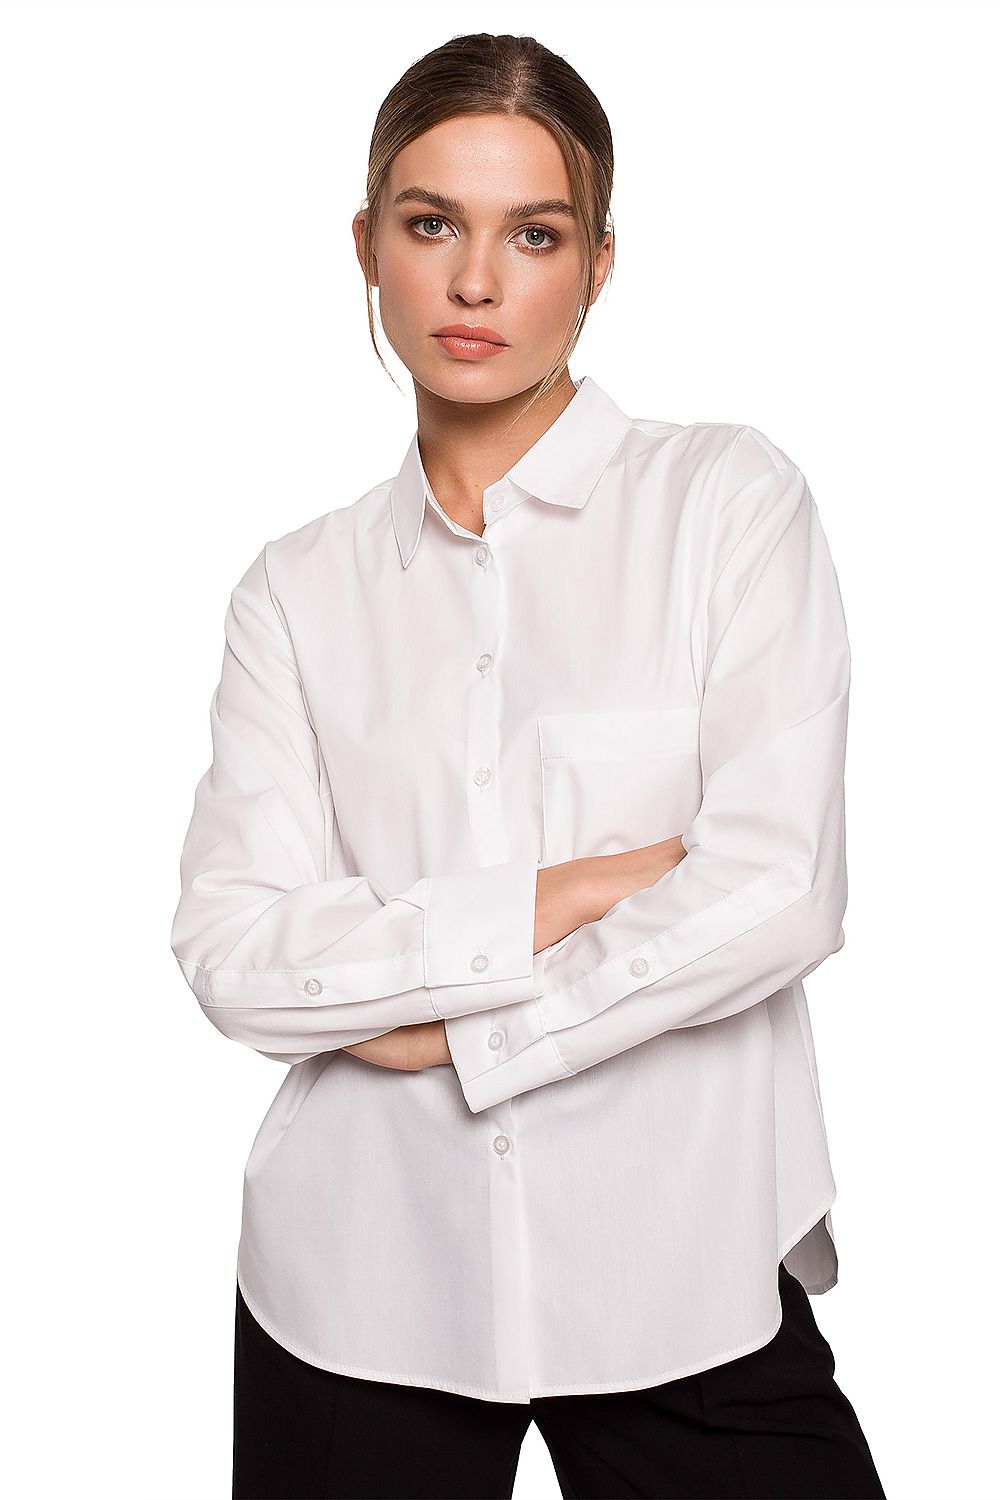 RM Long Sleeve Shirt